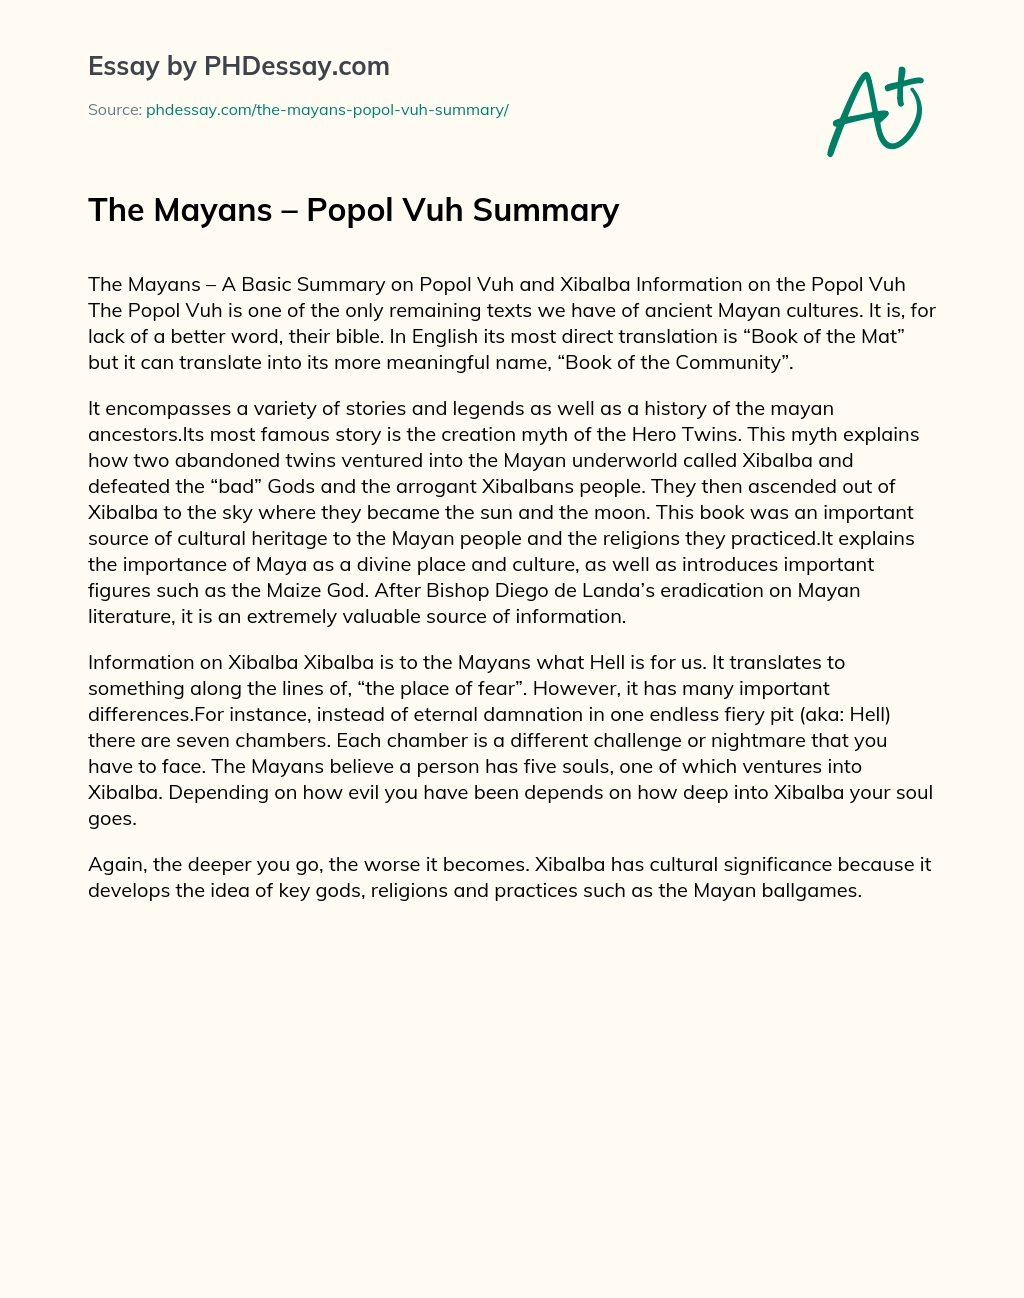 The Mayans – Popol Vuh Summary essay